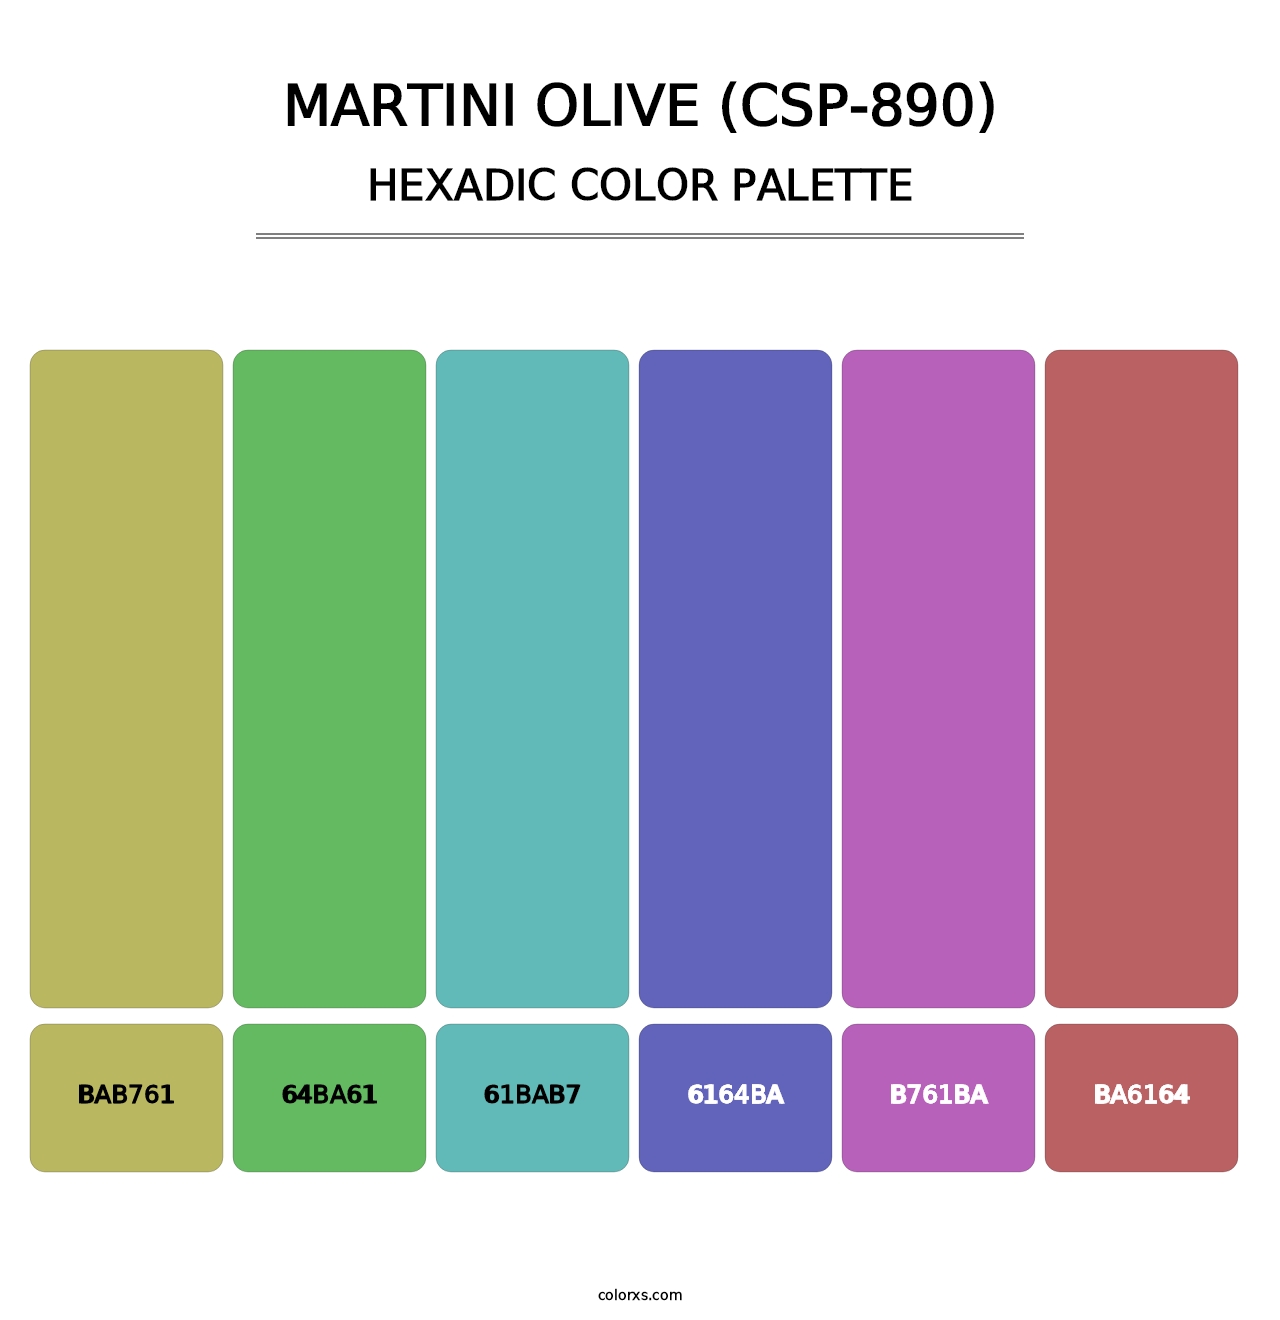 Martini Olive (CSP-890) - Hexadic Color Palette